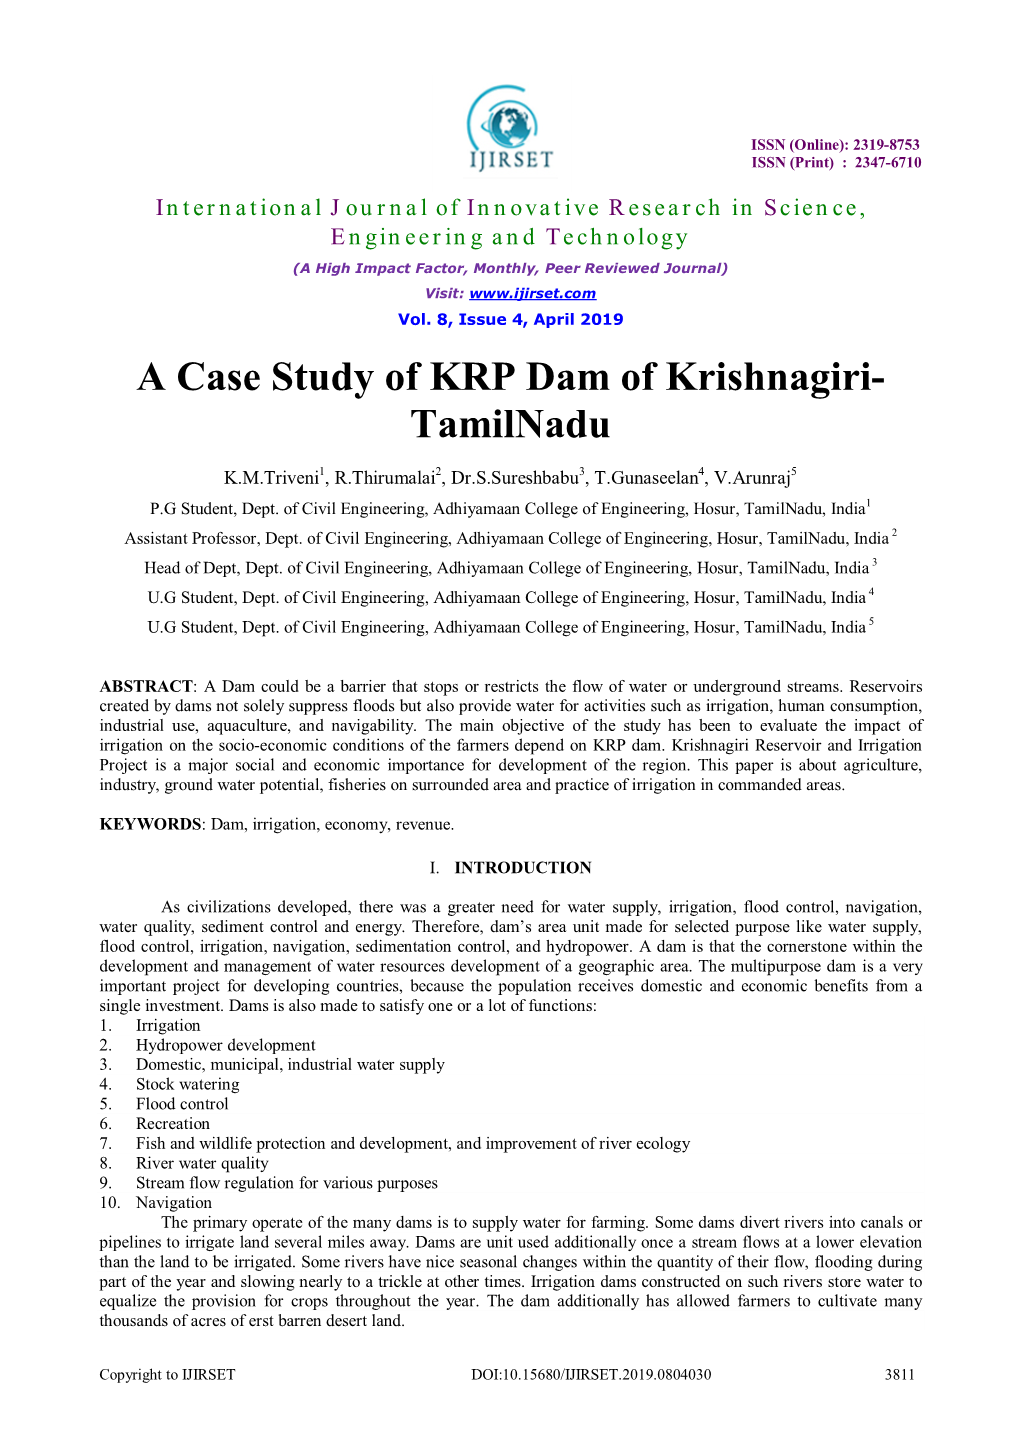 A Case Study of KRP Dam of Krishnagiri- Tamilnadu